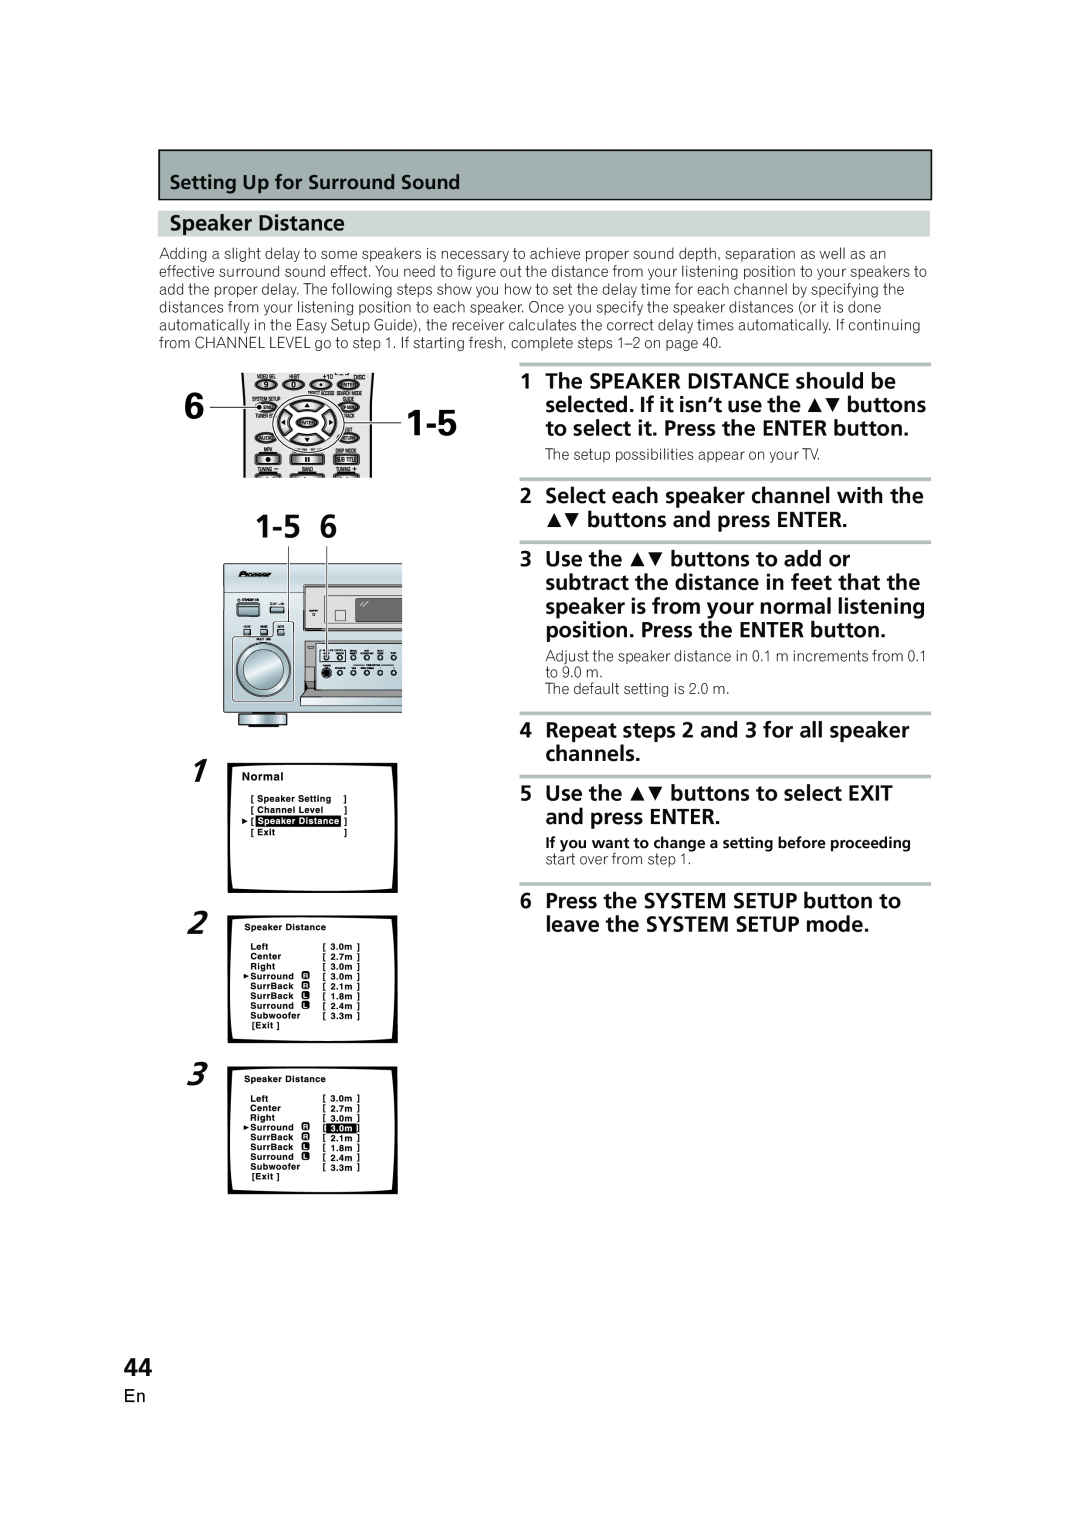 Pioneer VSX-AX5i-G manual 1-56, Speaker Distance 